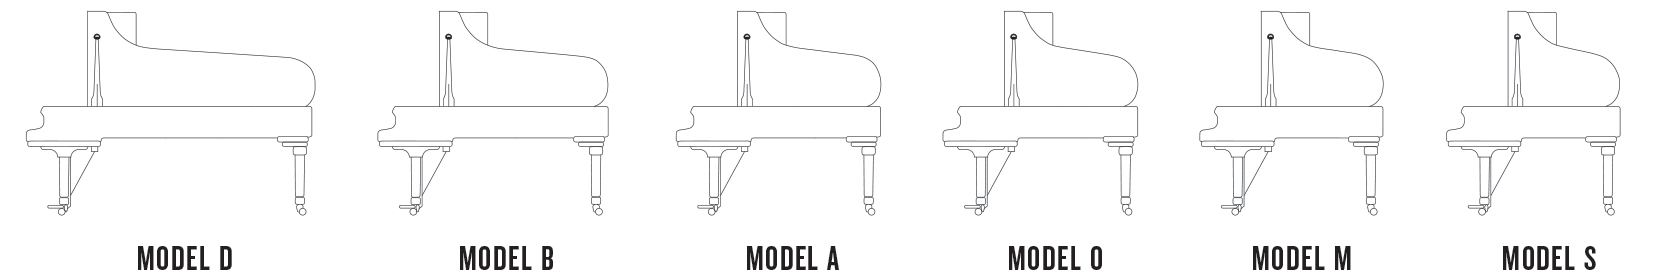 Steinway Piano Size Chart